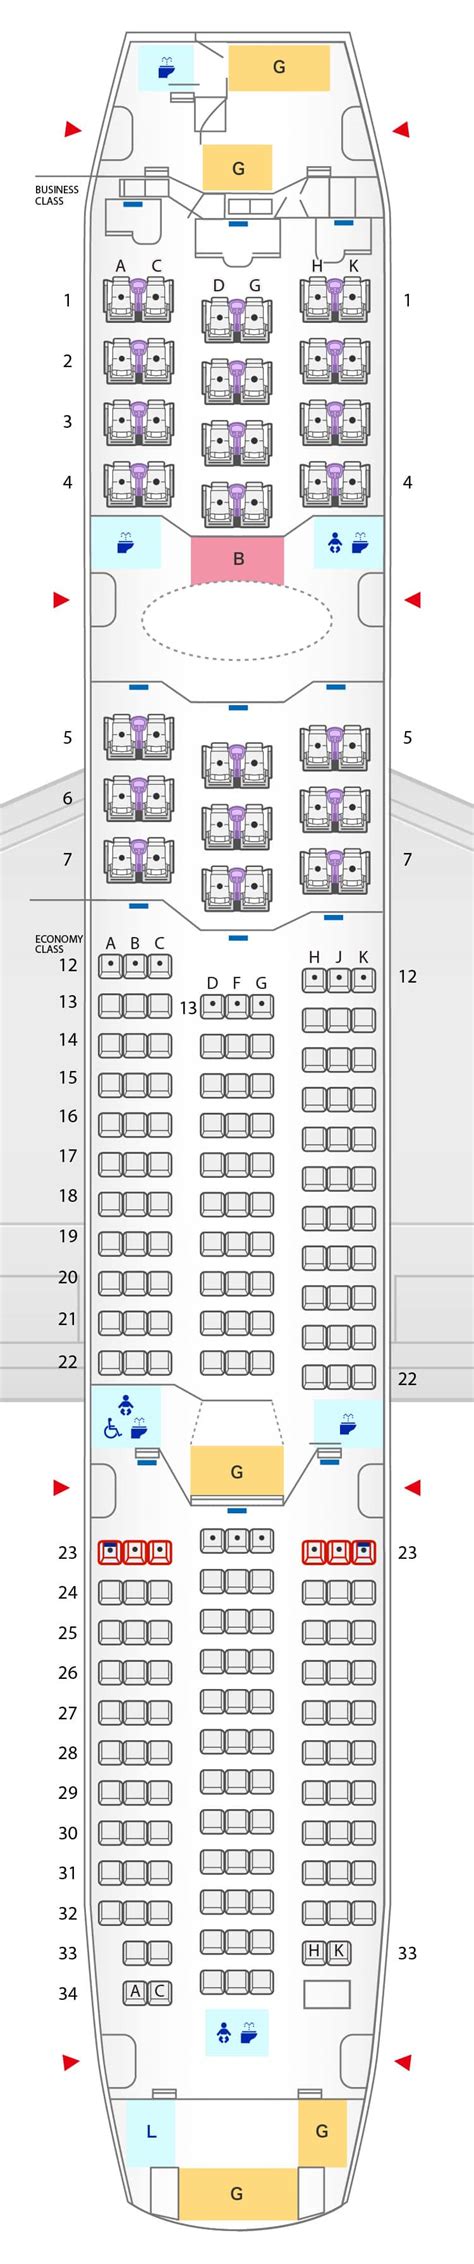 boeing 787-8 dreamliner seating chart united